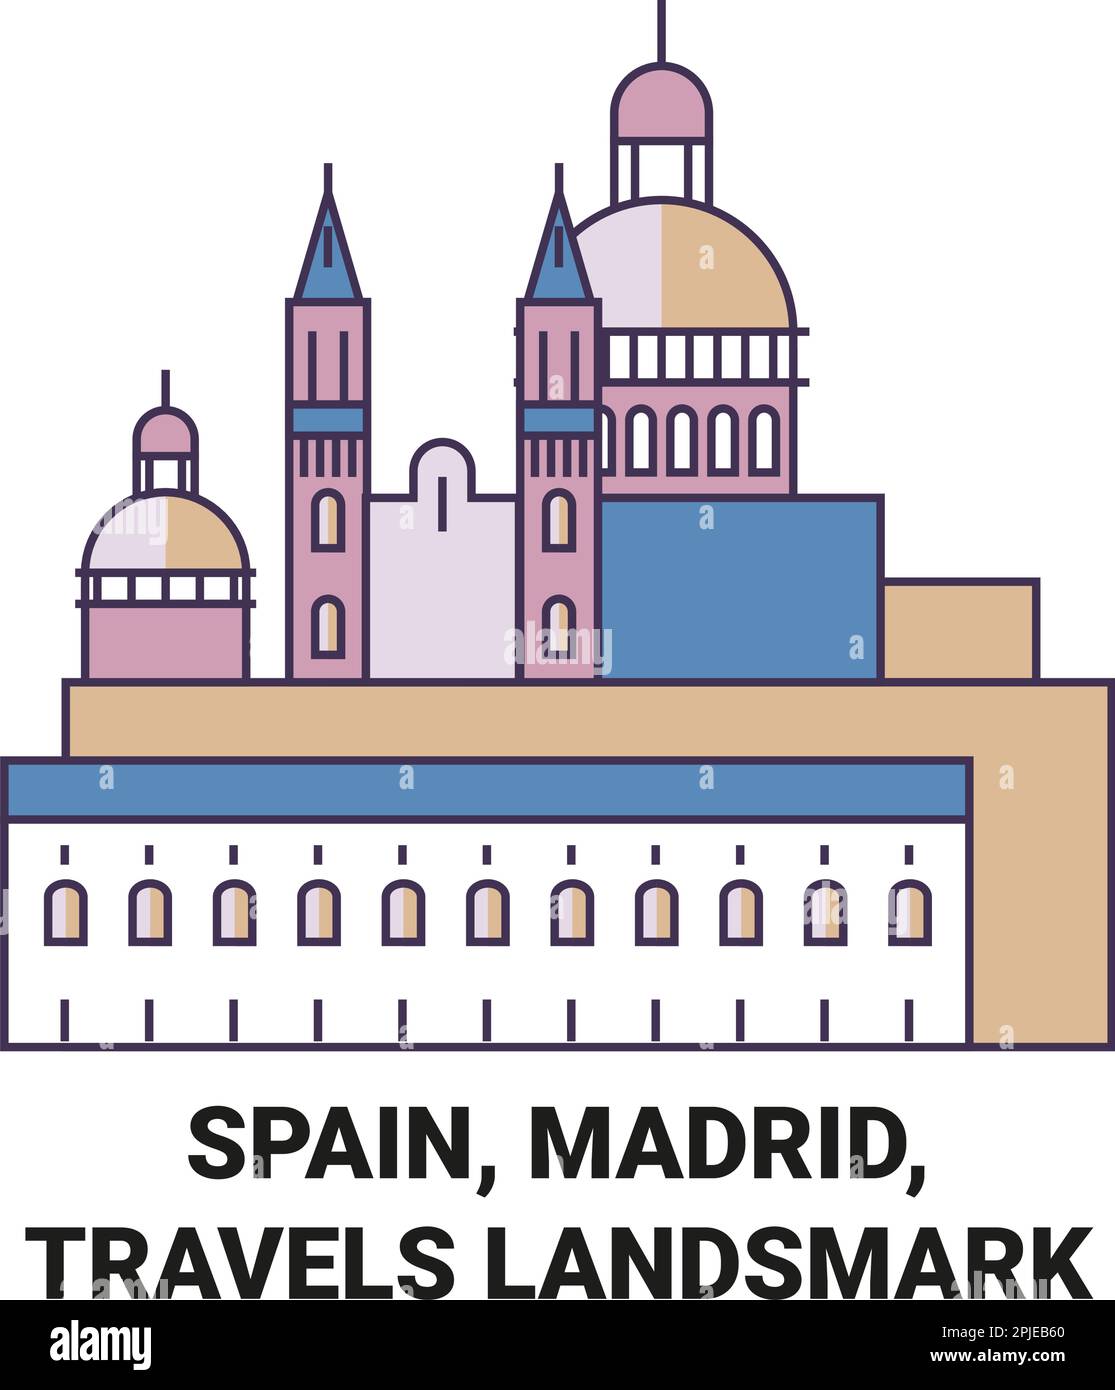 Spain, Madrid, Travels Landsmark travel landmark vector illustration Stock Vector